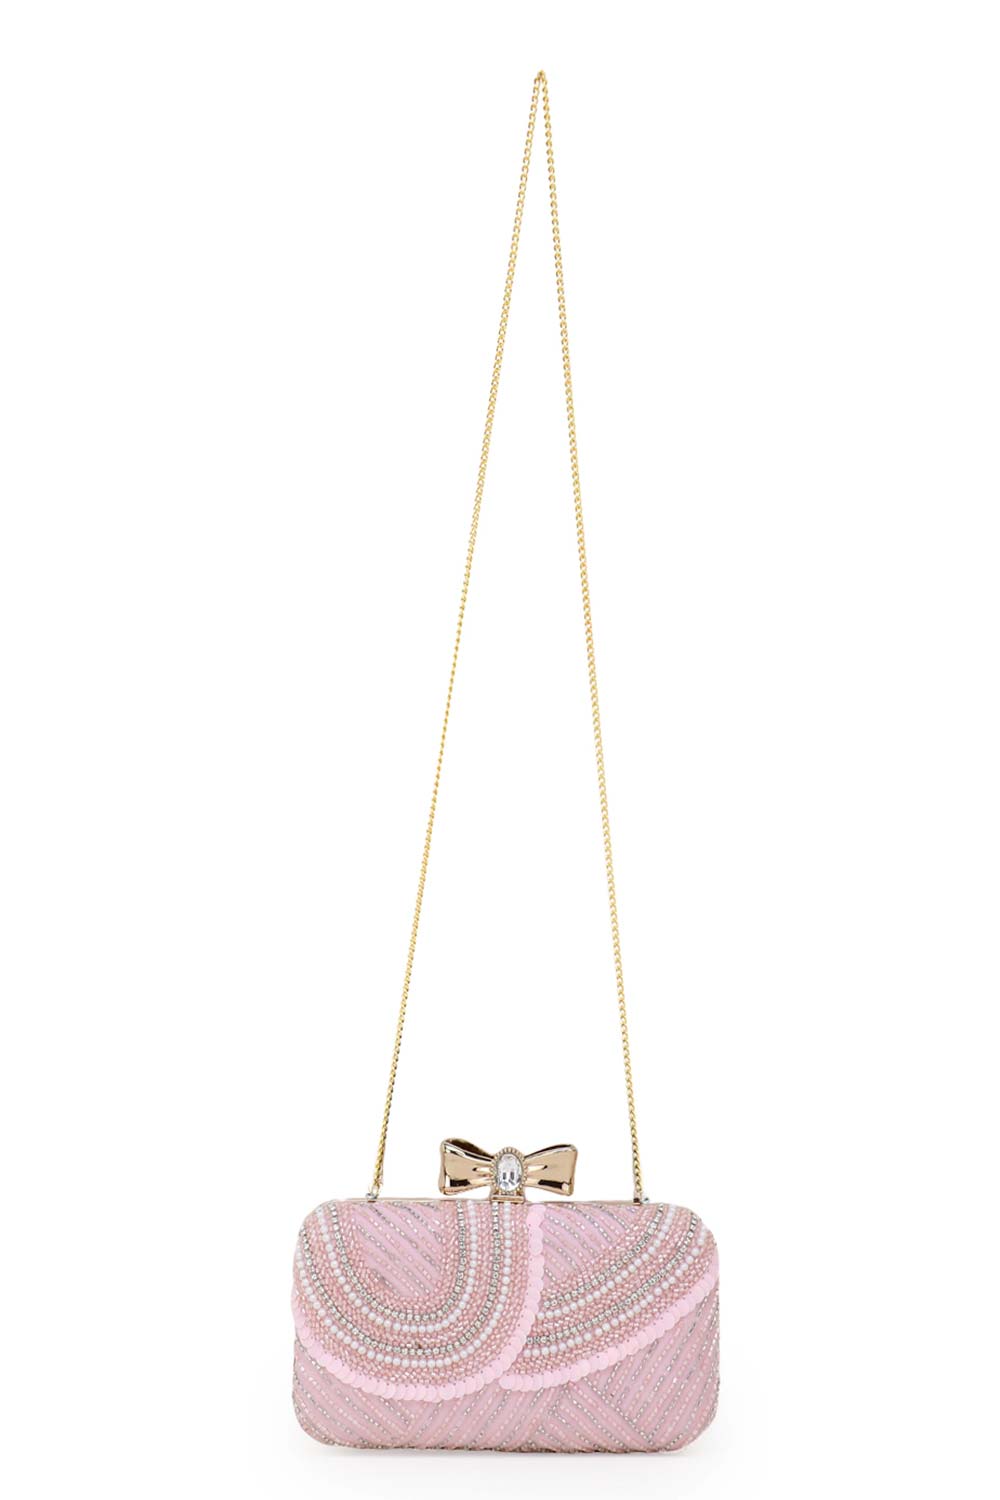 Designer Baby Pink & White Bead & Diamond Clutch